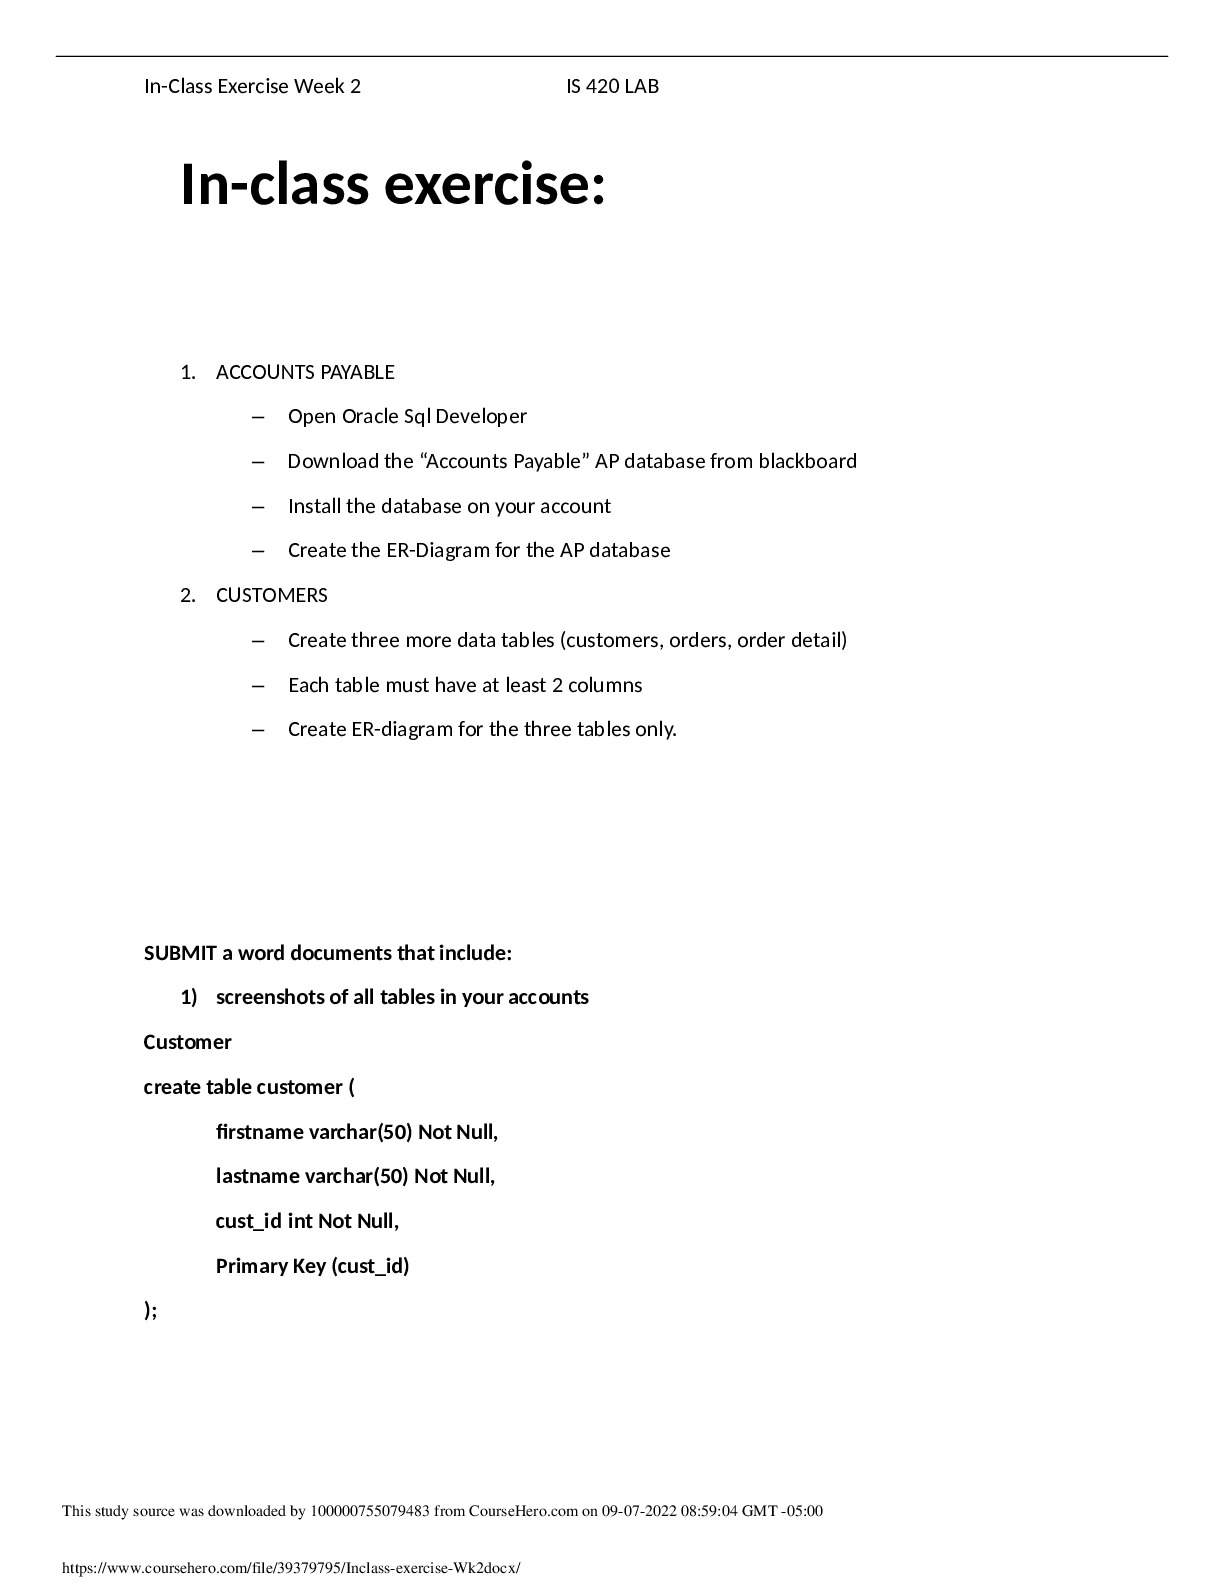 Inclass_exercise_Wk2.docx